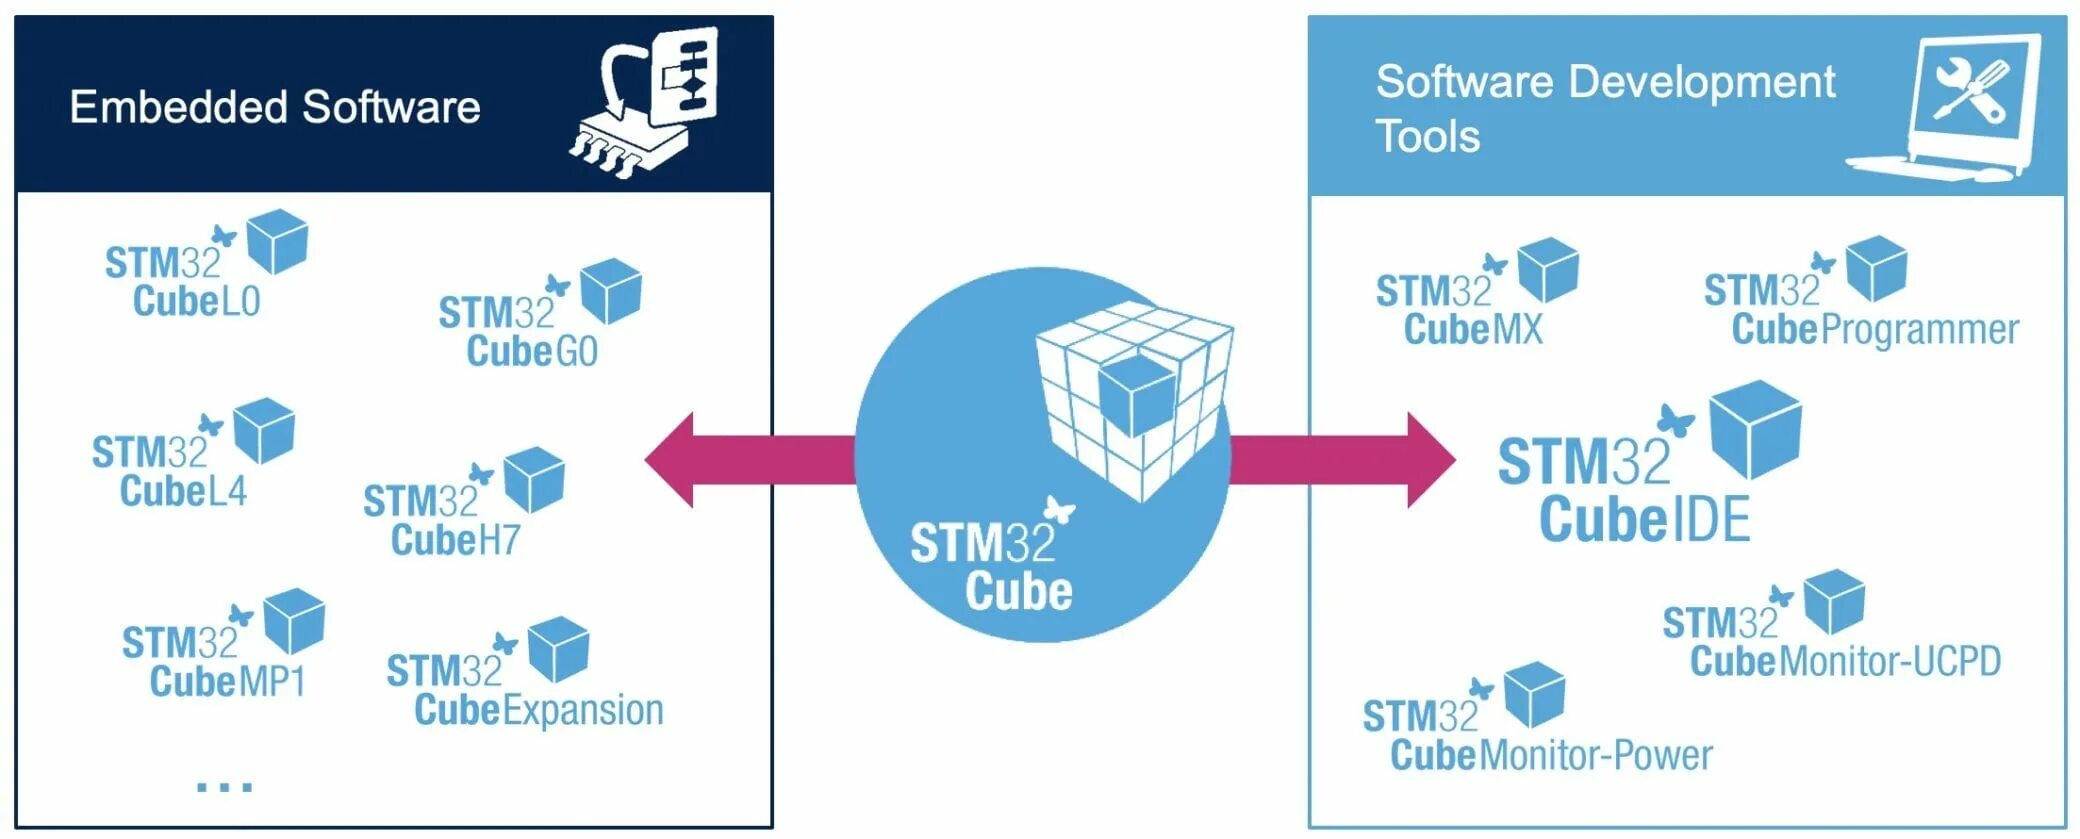 Stm32 cube mx. Stm32cubeide. Stm32cubemx ide. Stm32 Cube. STM Cube ide.